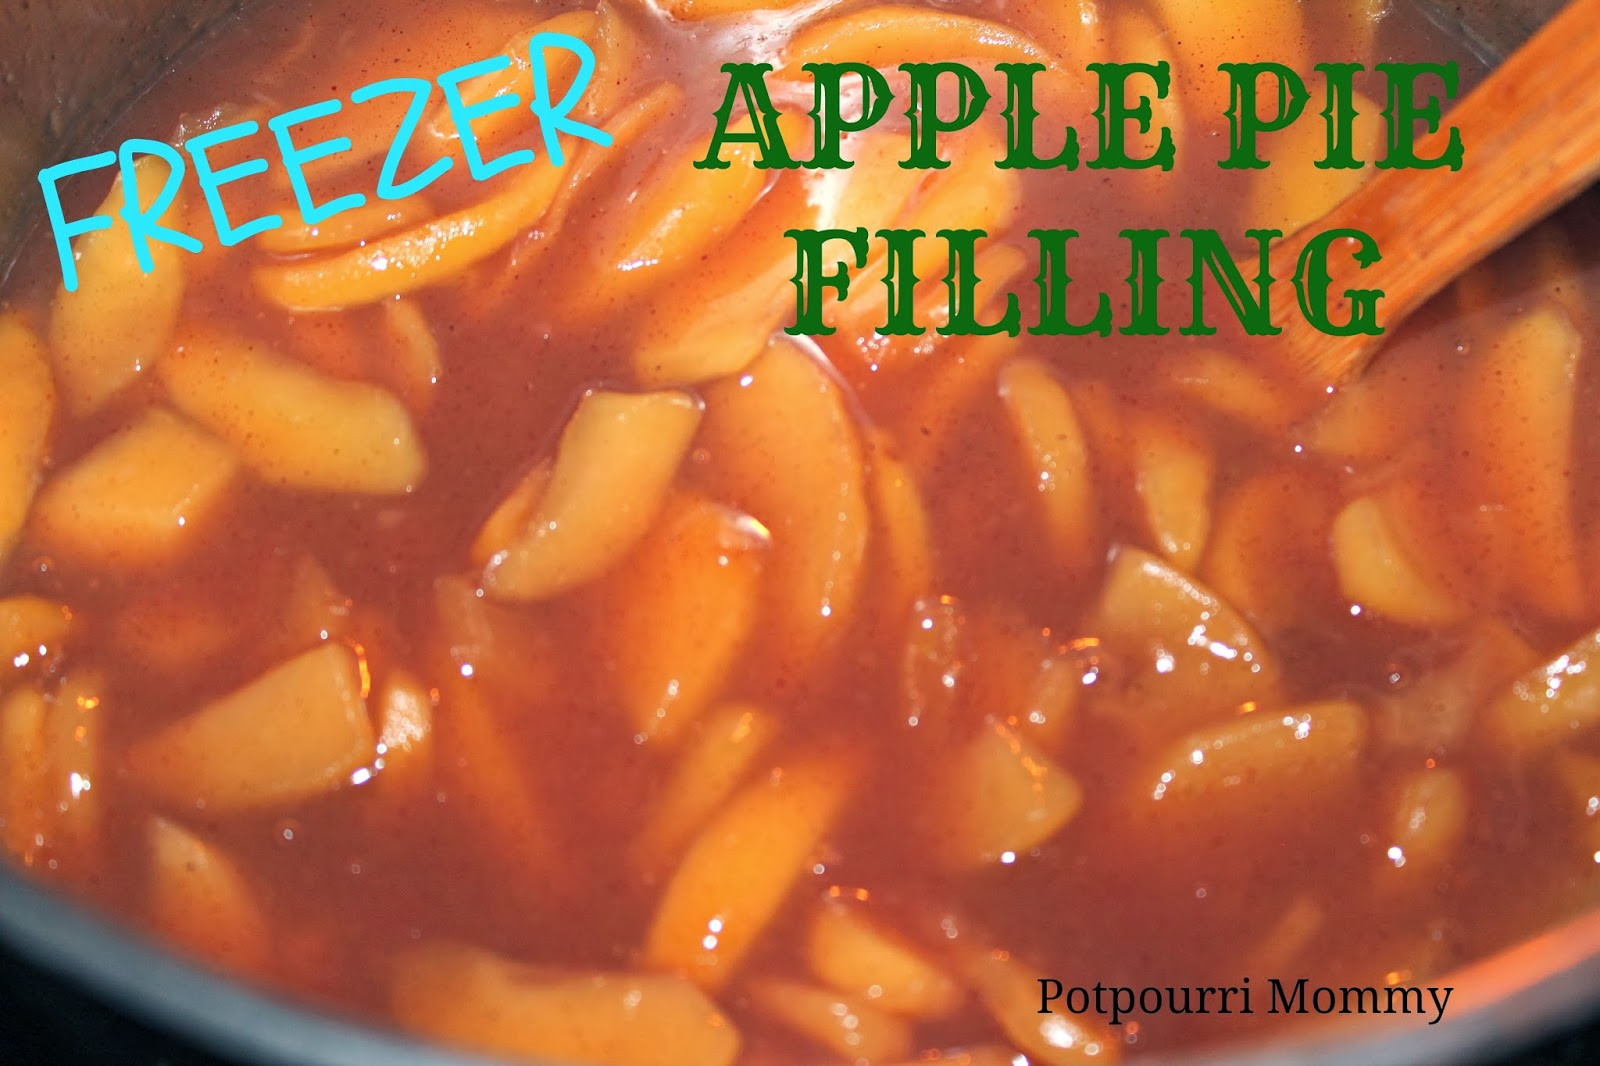 Freezer Apple Pie Filling
 Potpourri Mommy Freezer Apple Pie Filling